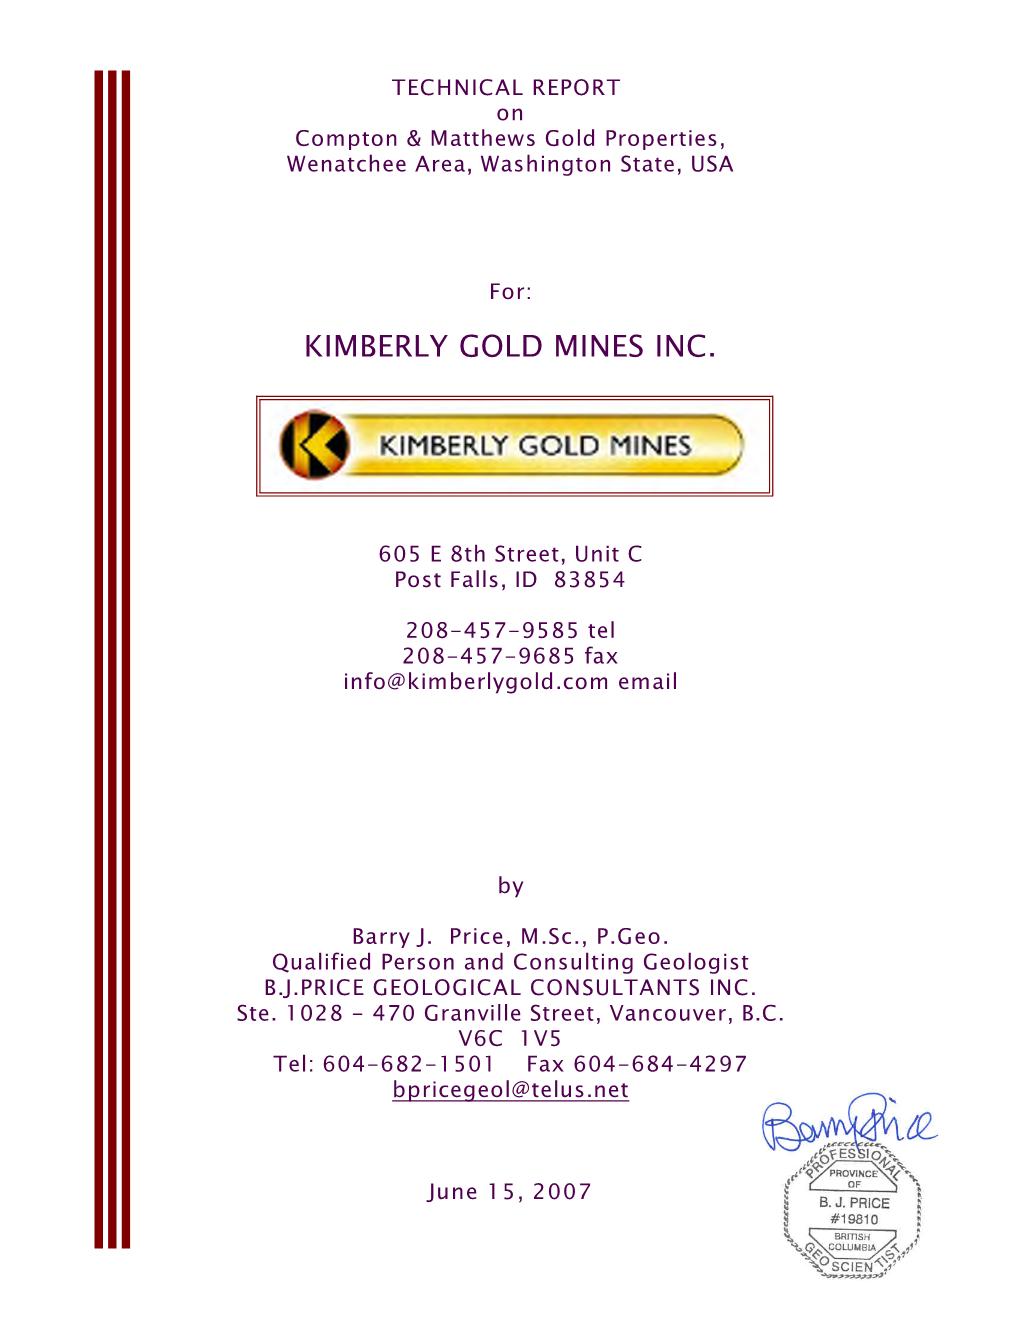 Kimberly Gold Mines Inc